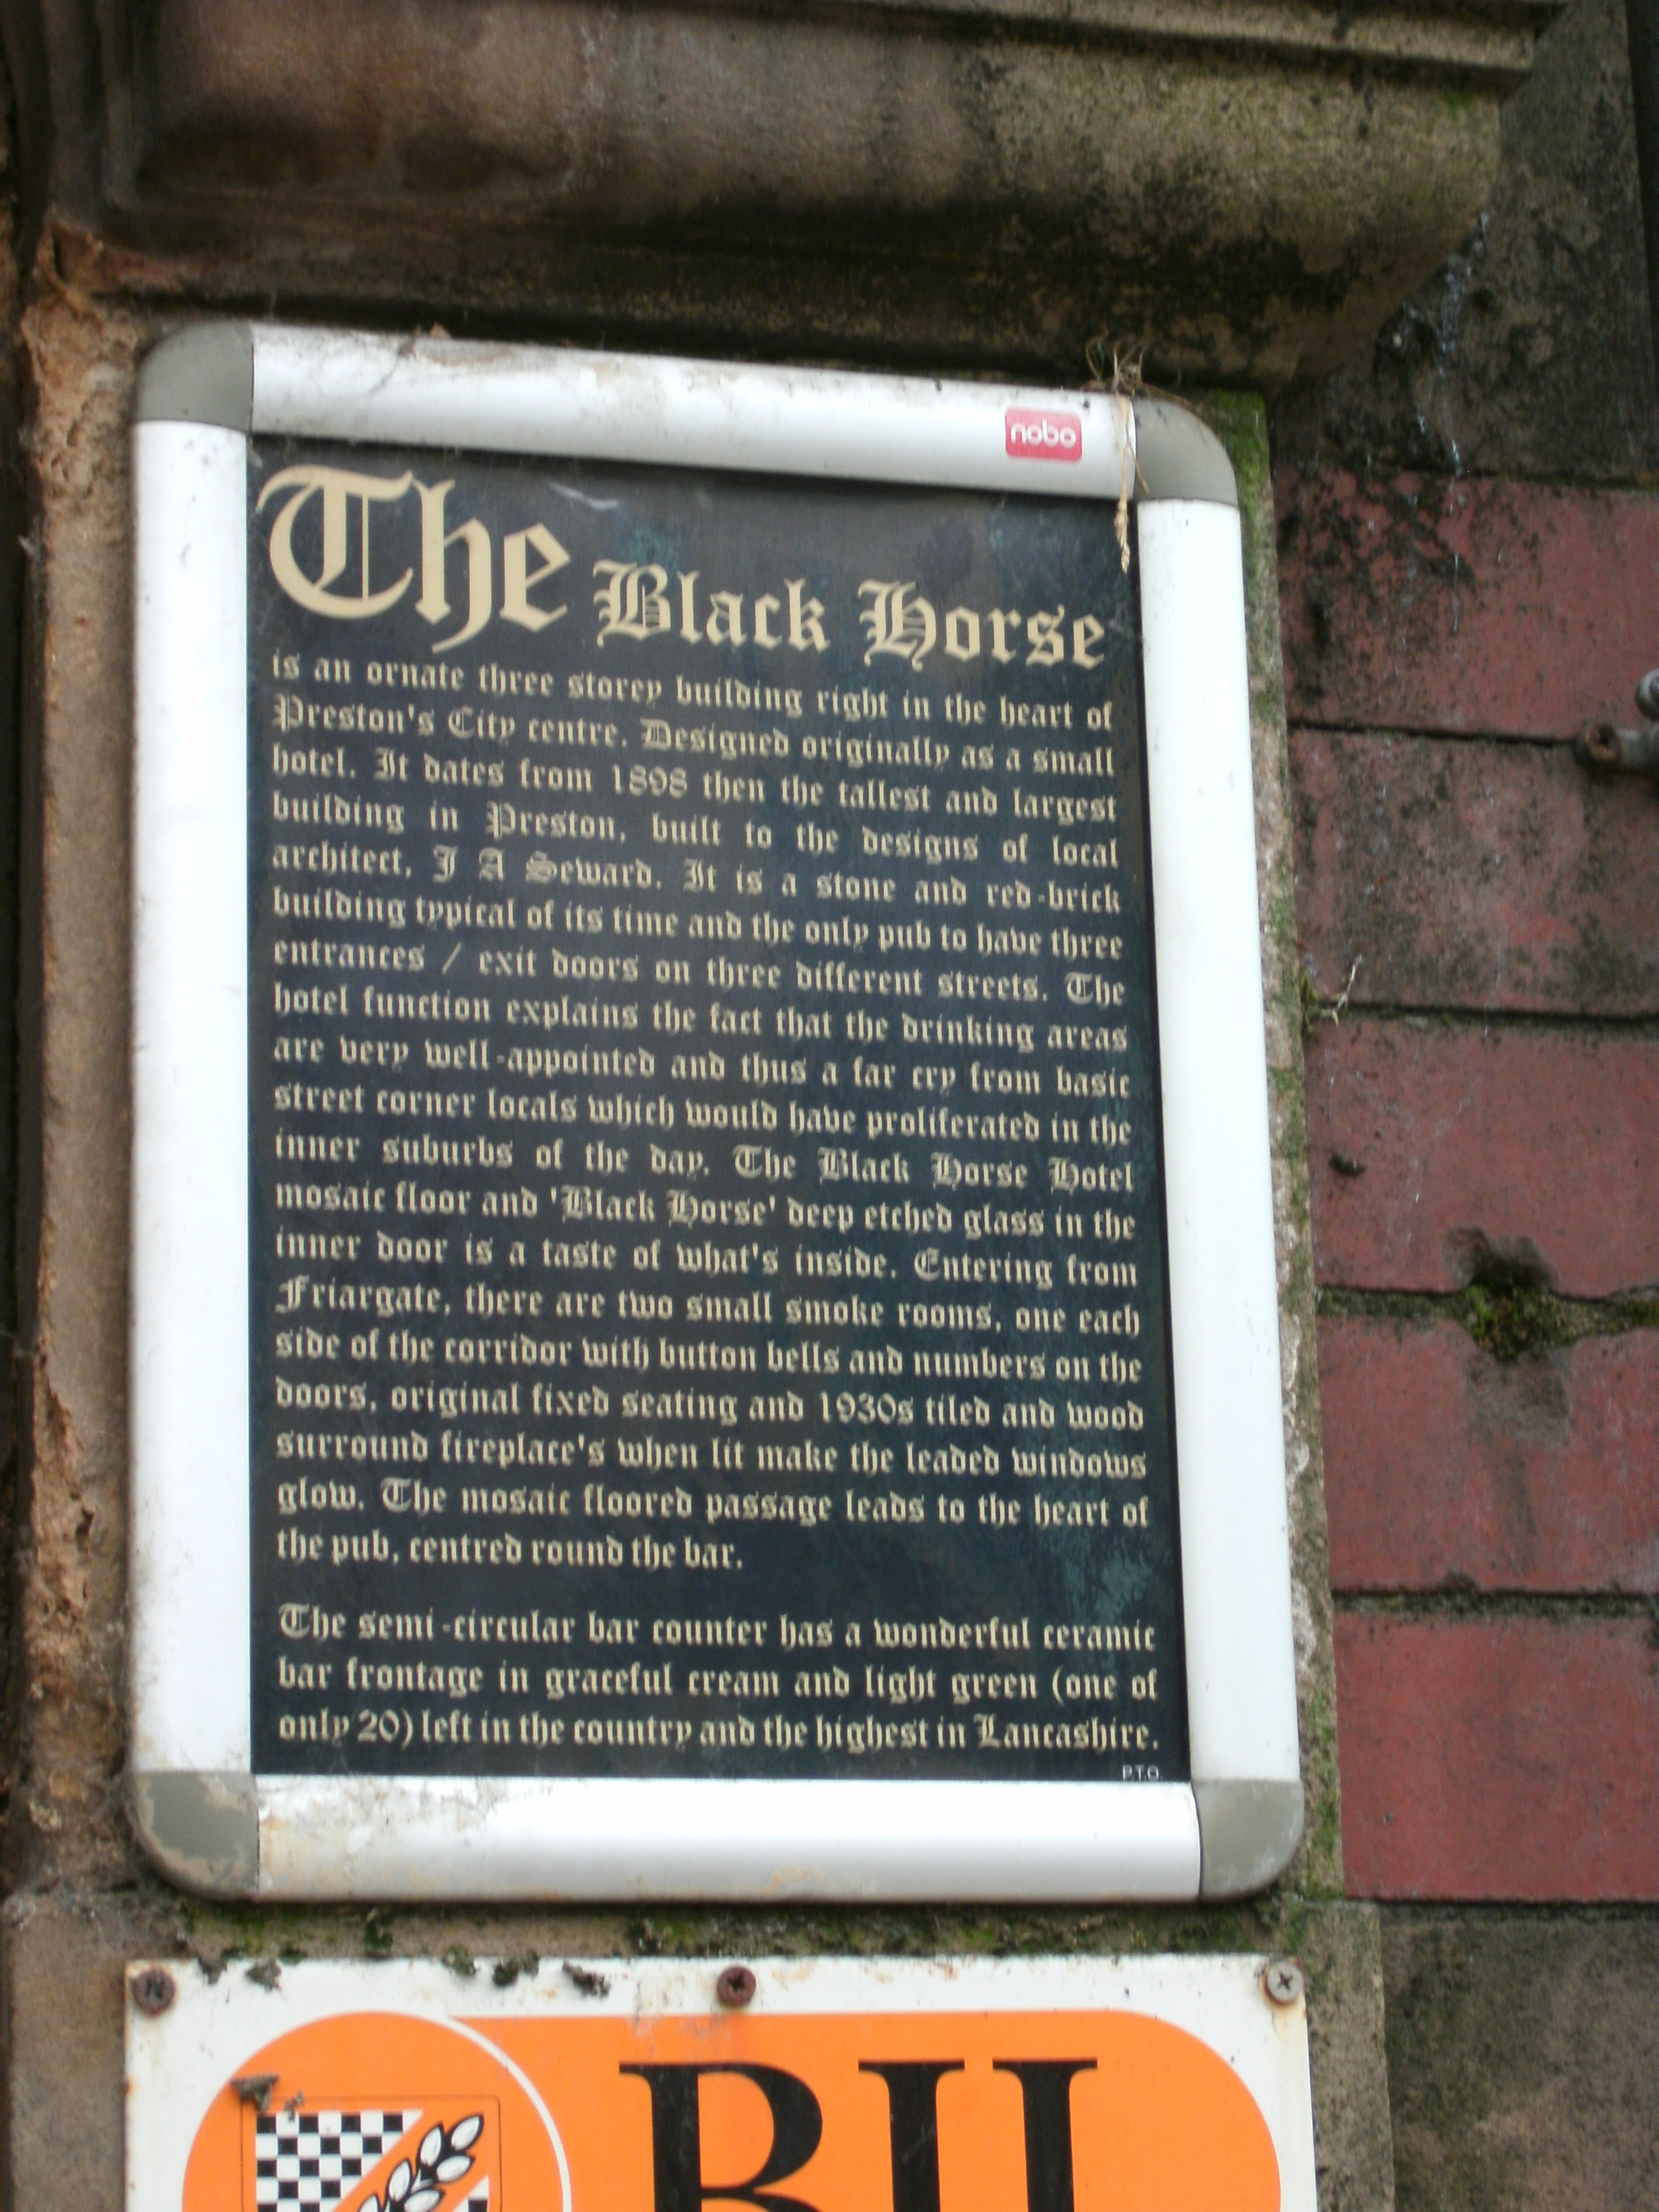 Photo taken by me – The Black Horse pub, Preston 